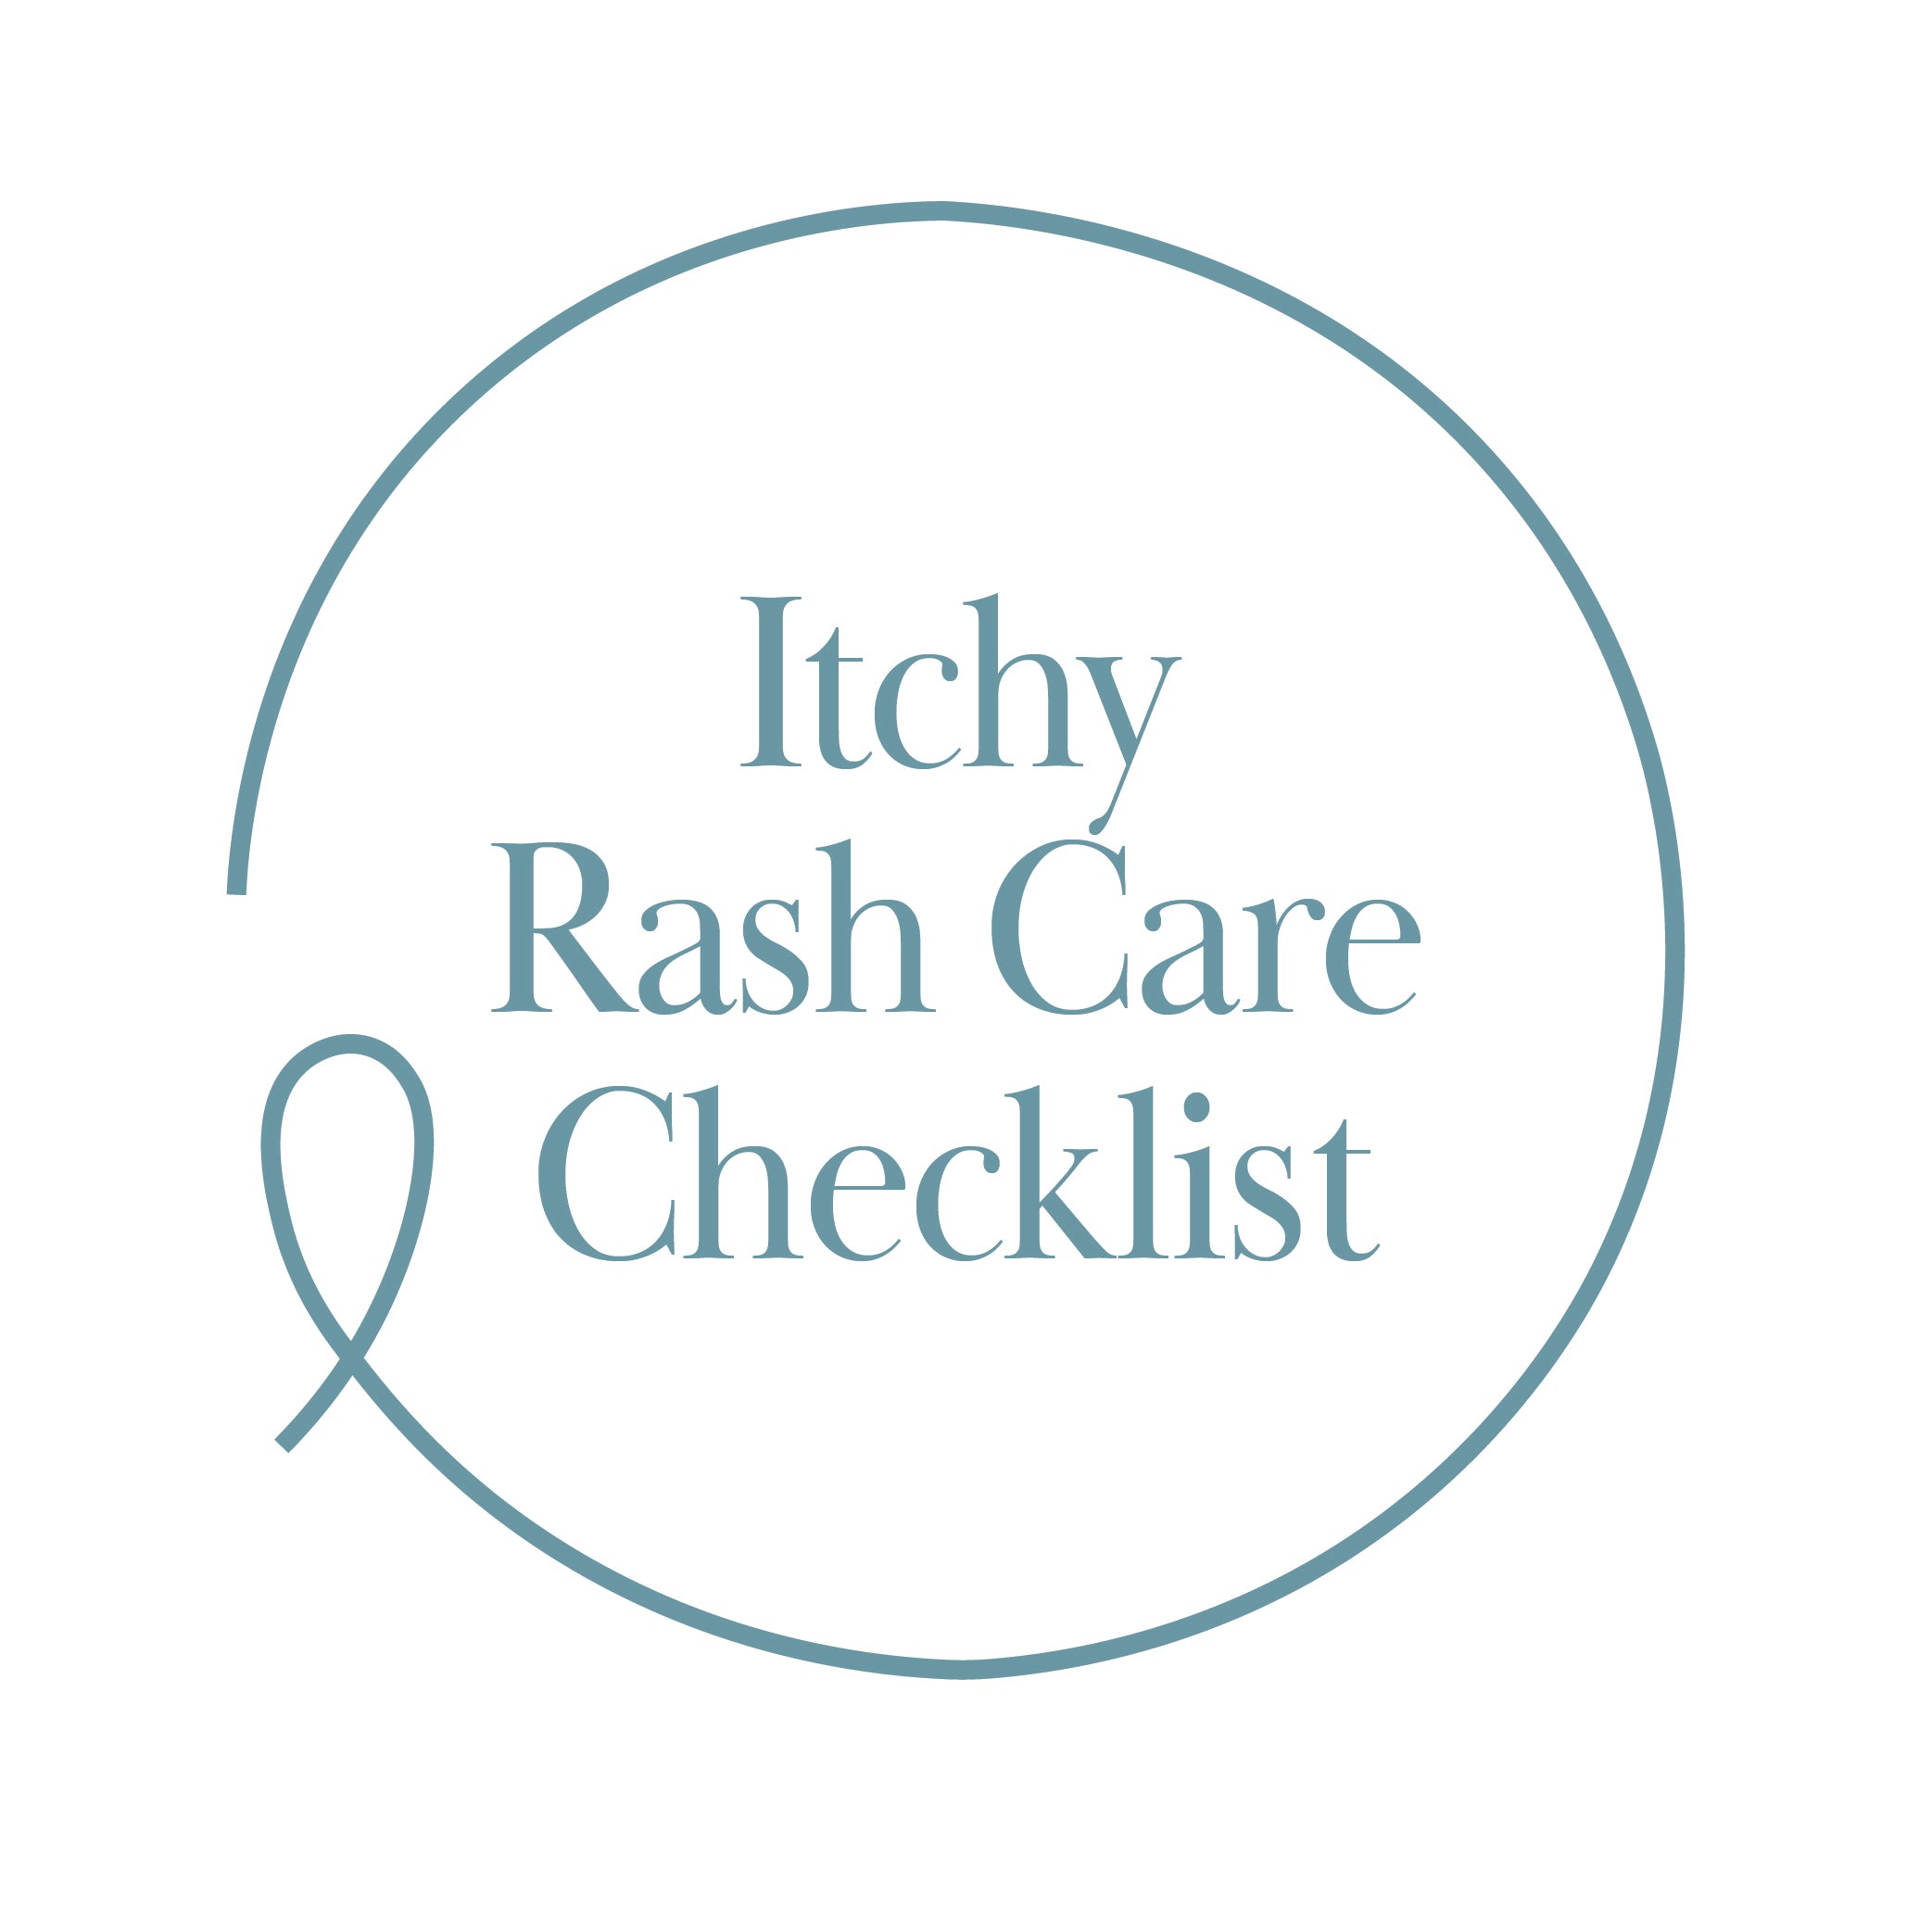 Itchy Rash Care Checklist